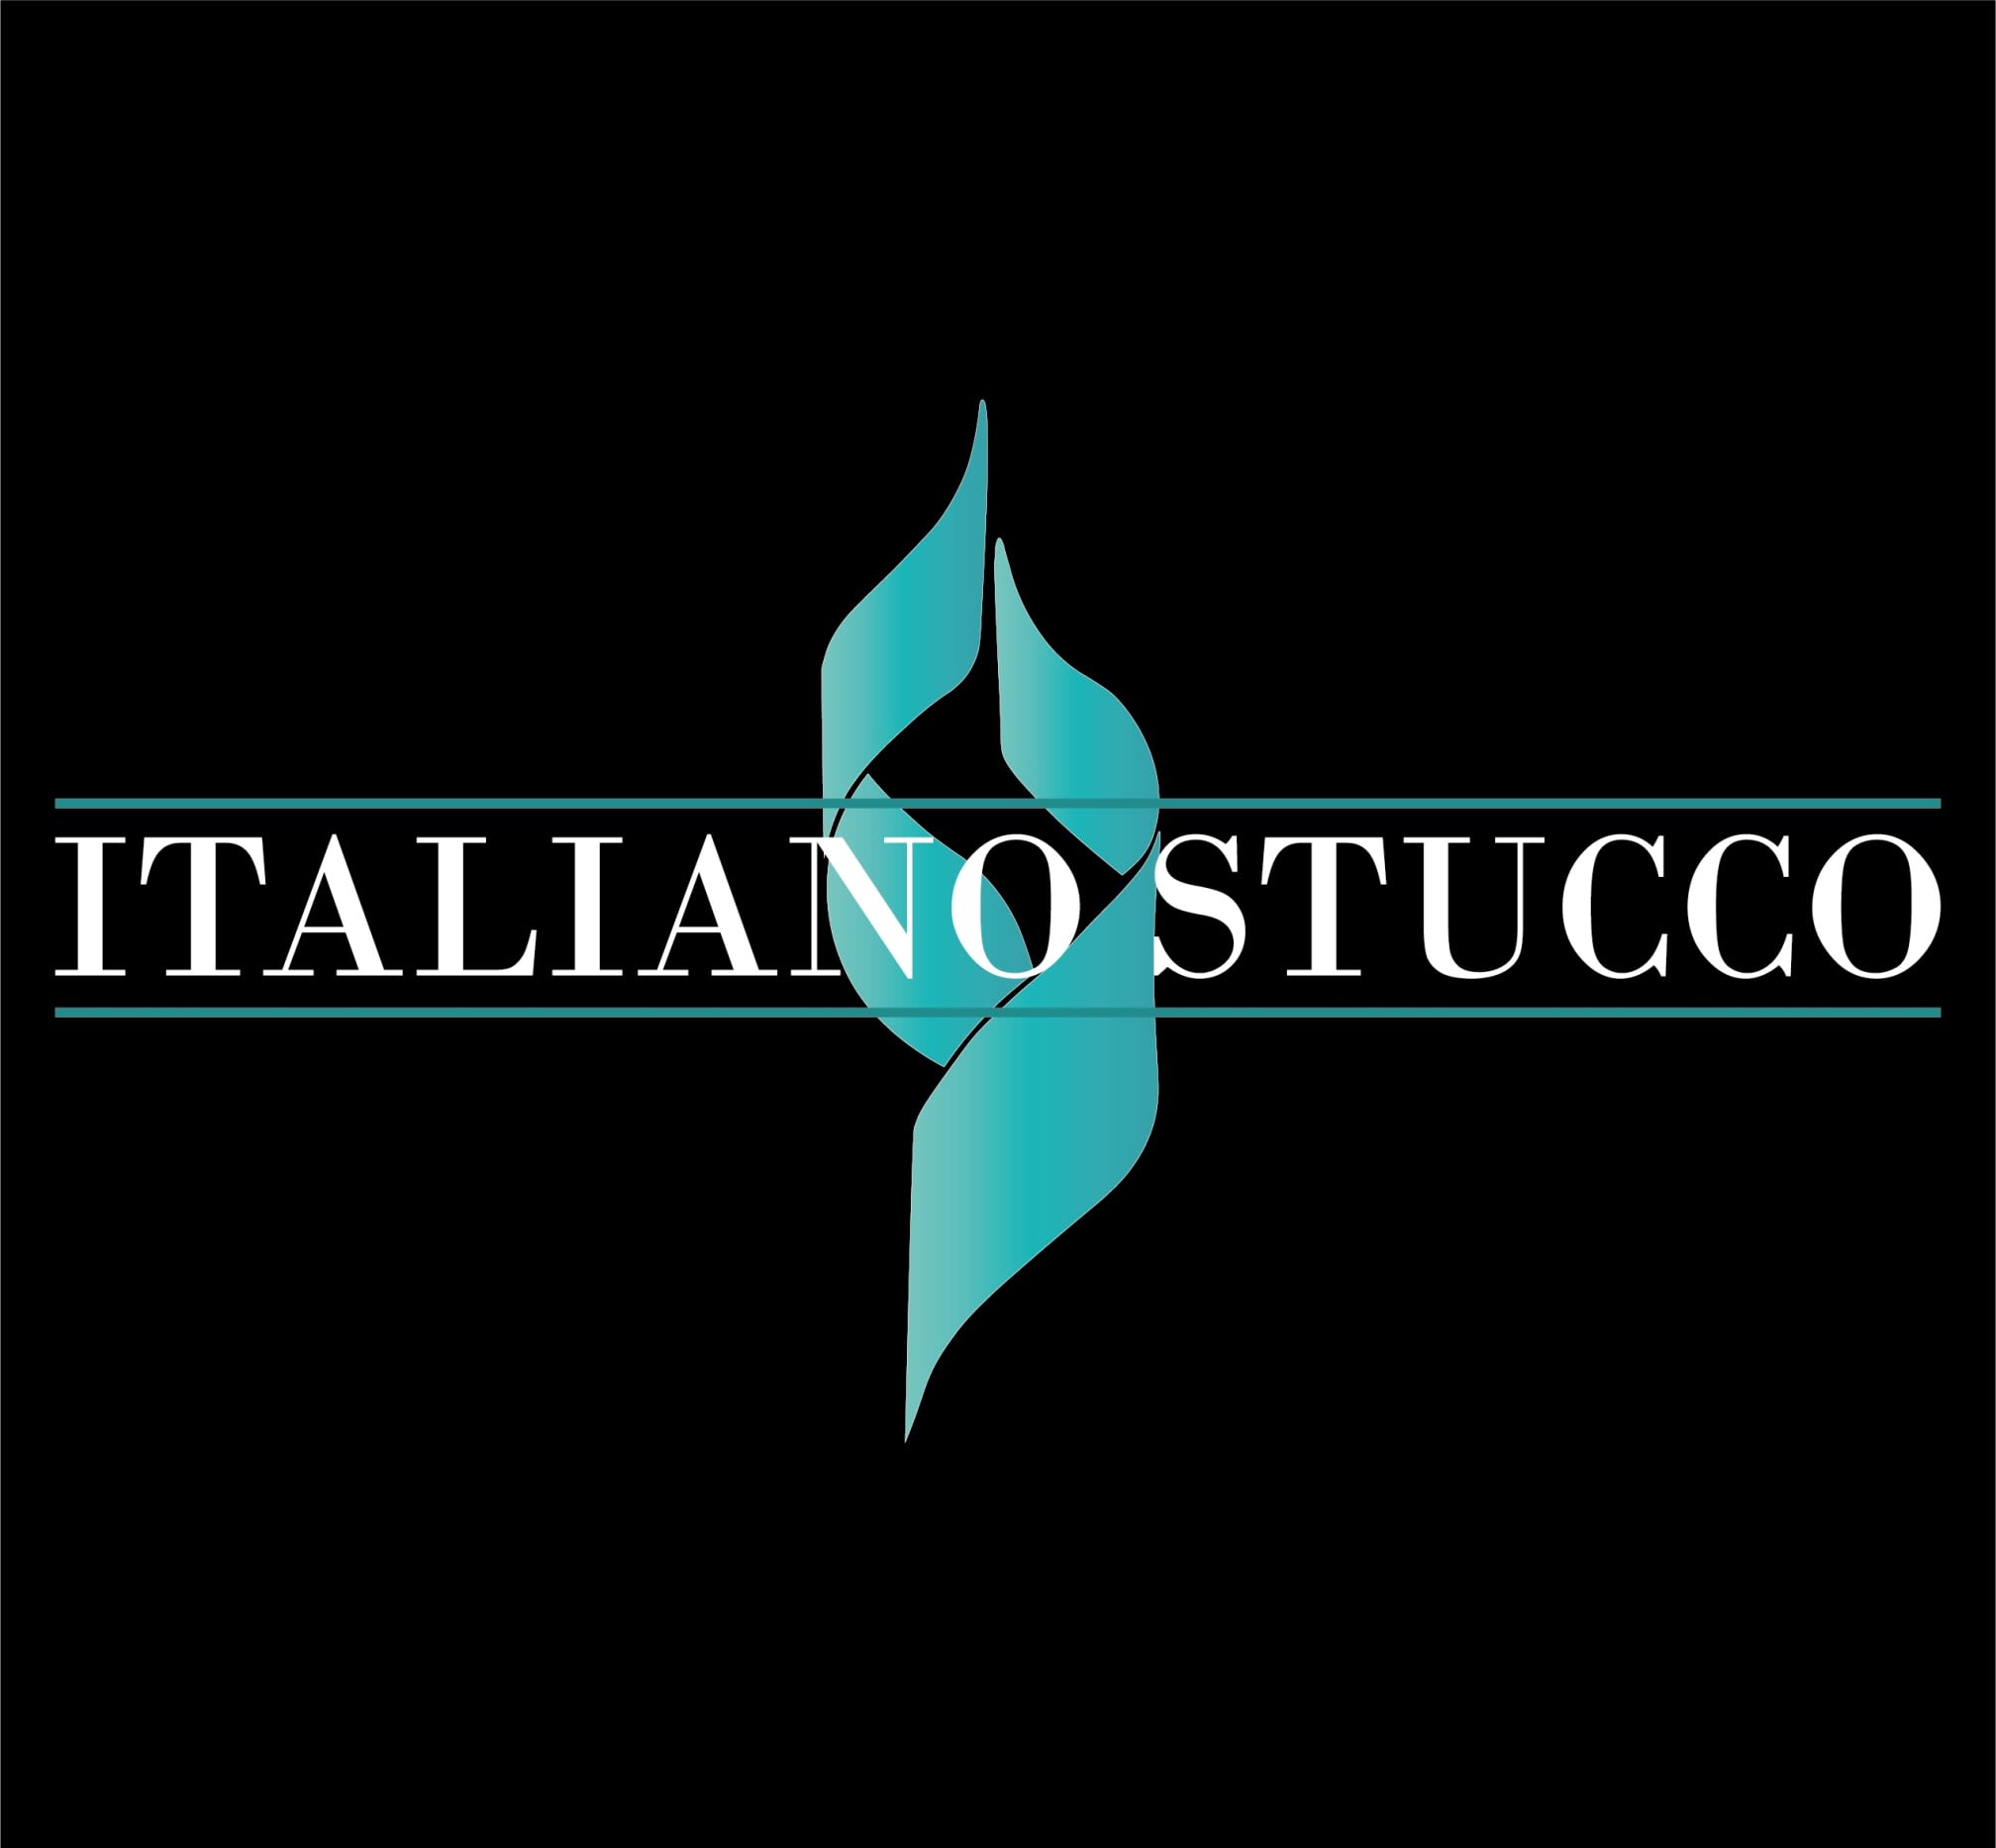 Images Italiano Stucco